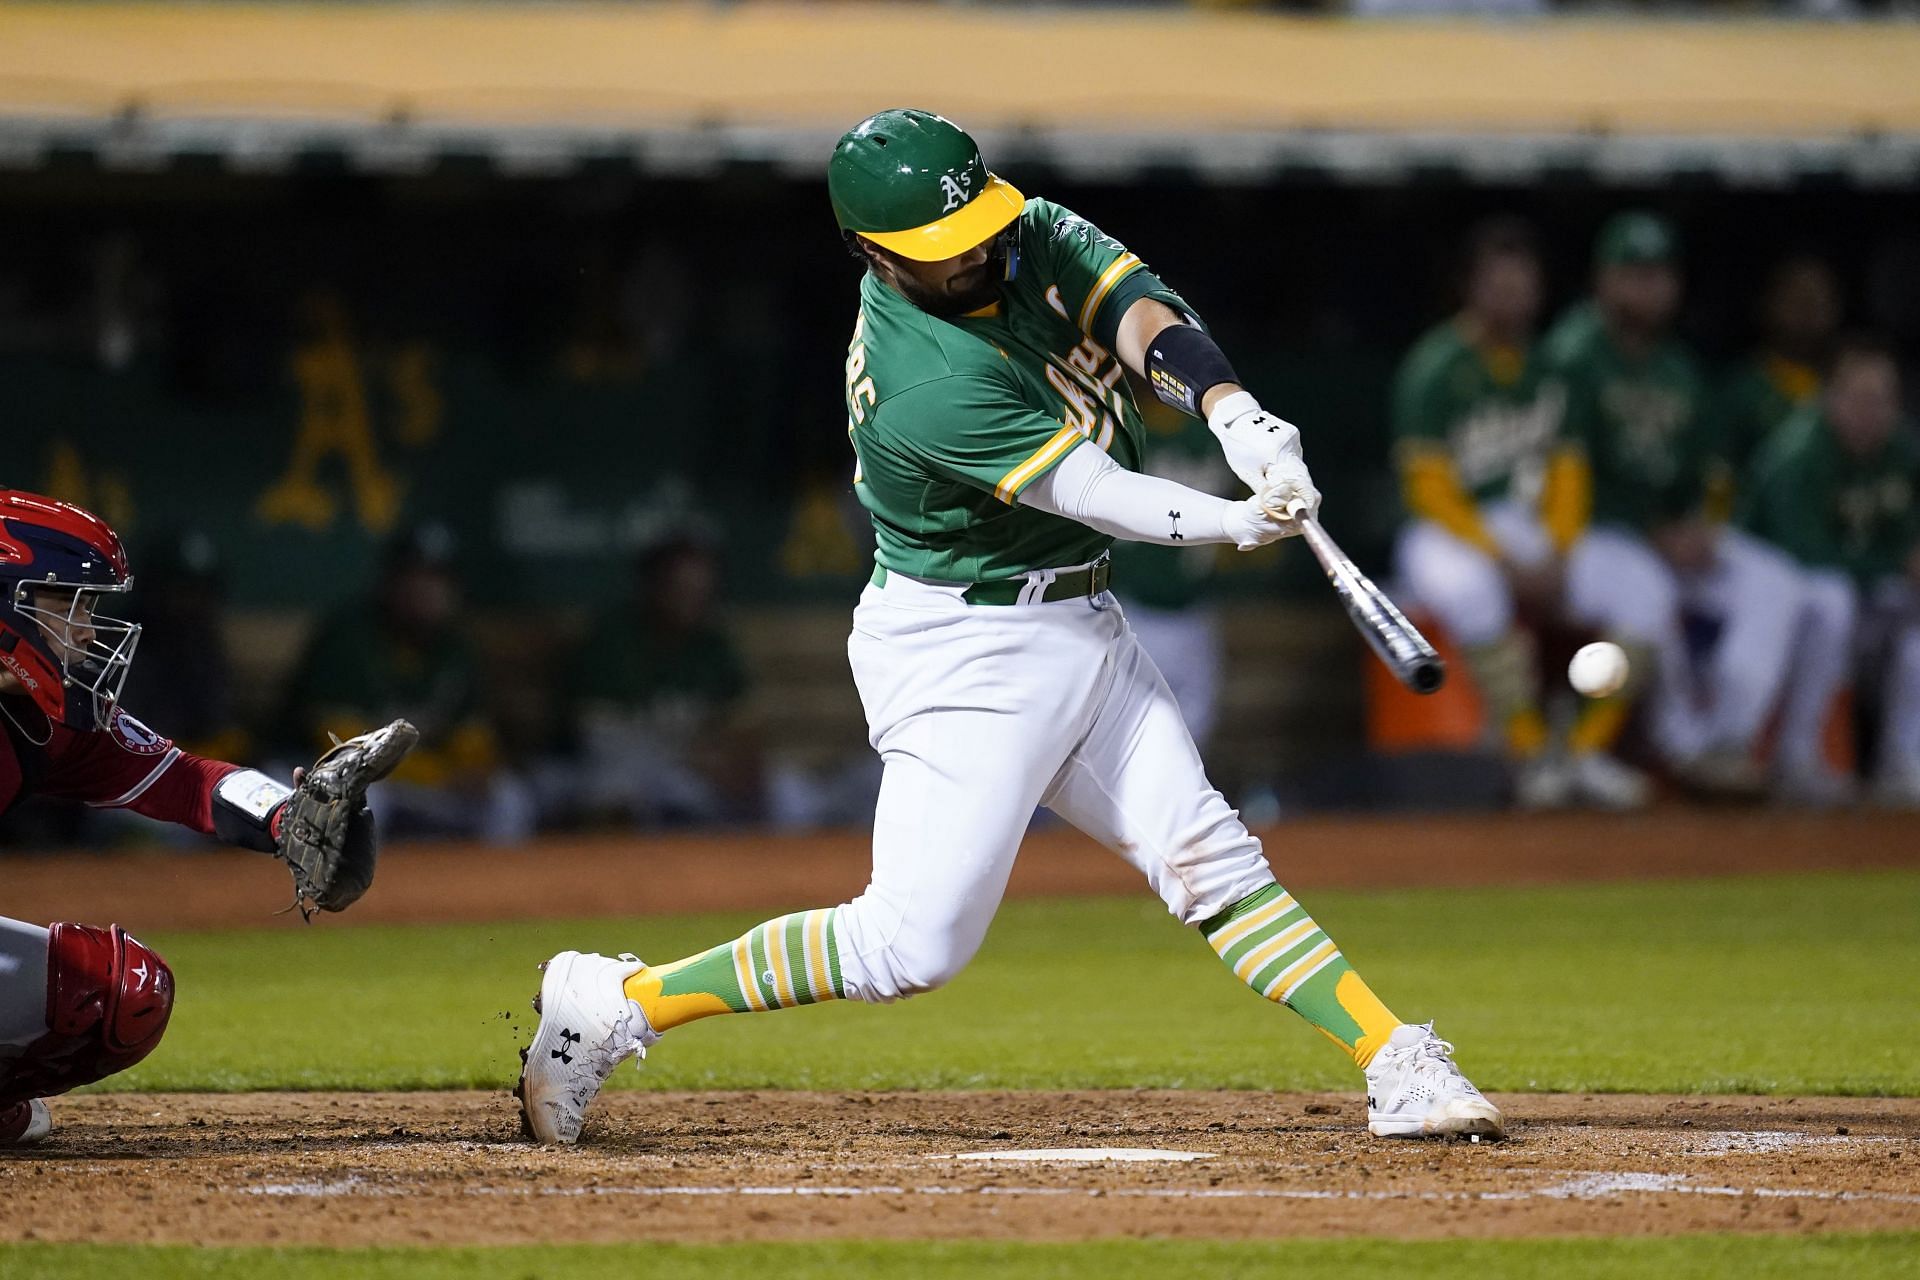 Incalculable loss': Oakland battles to save last pro sports team, Baseball